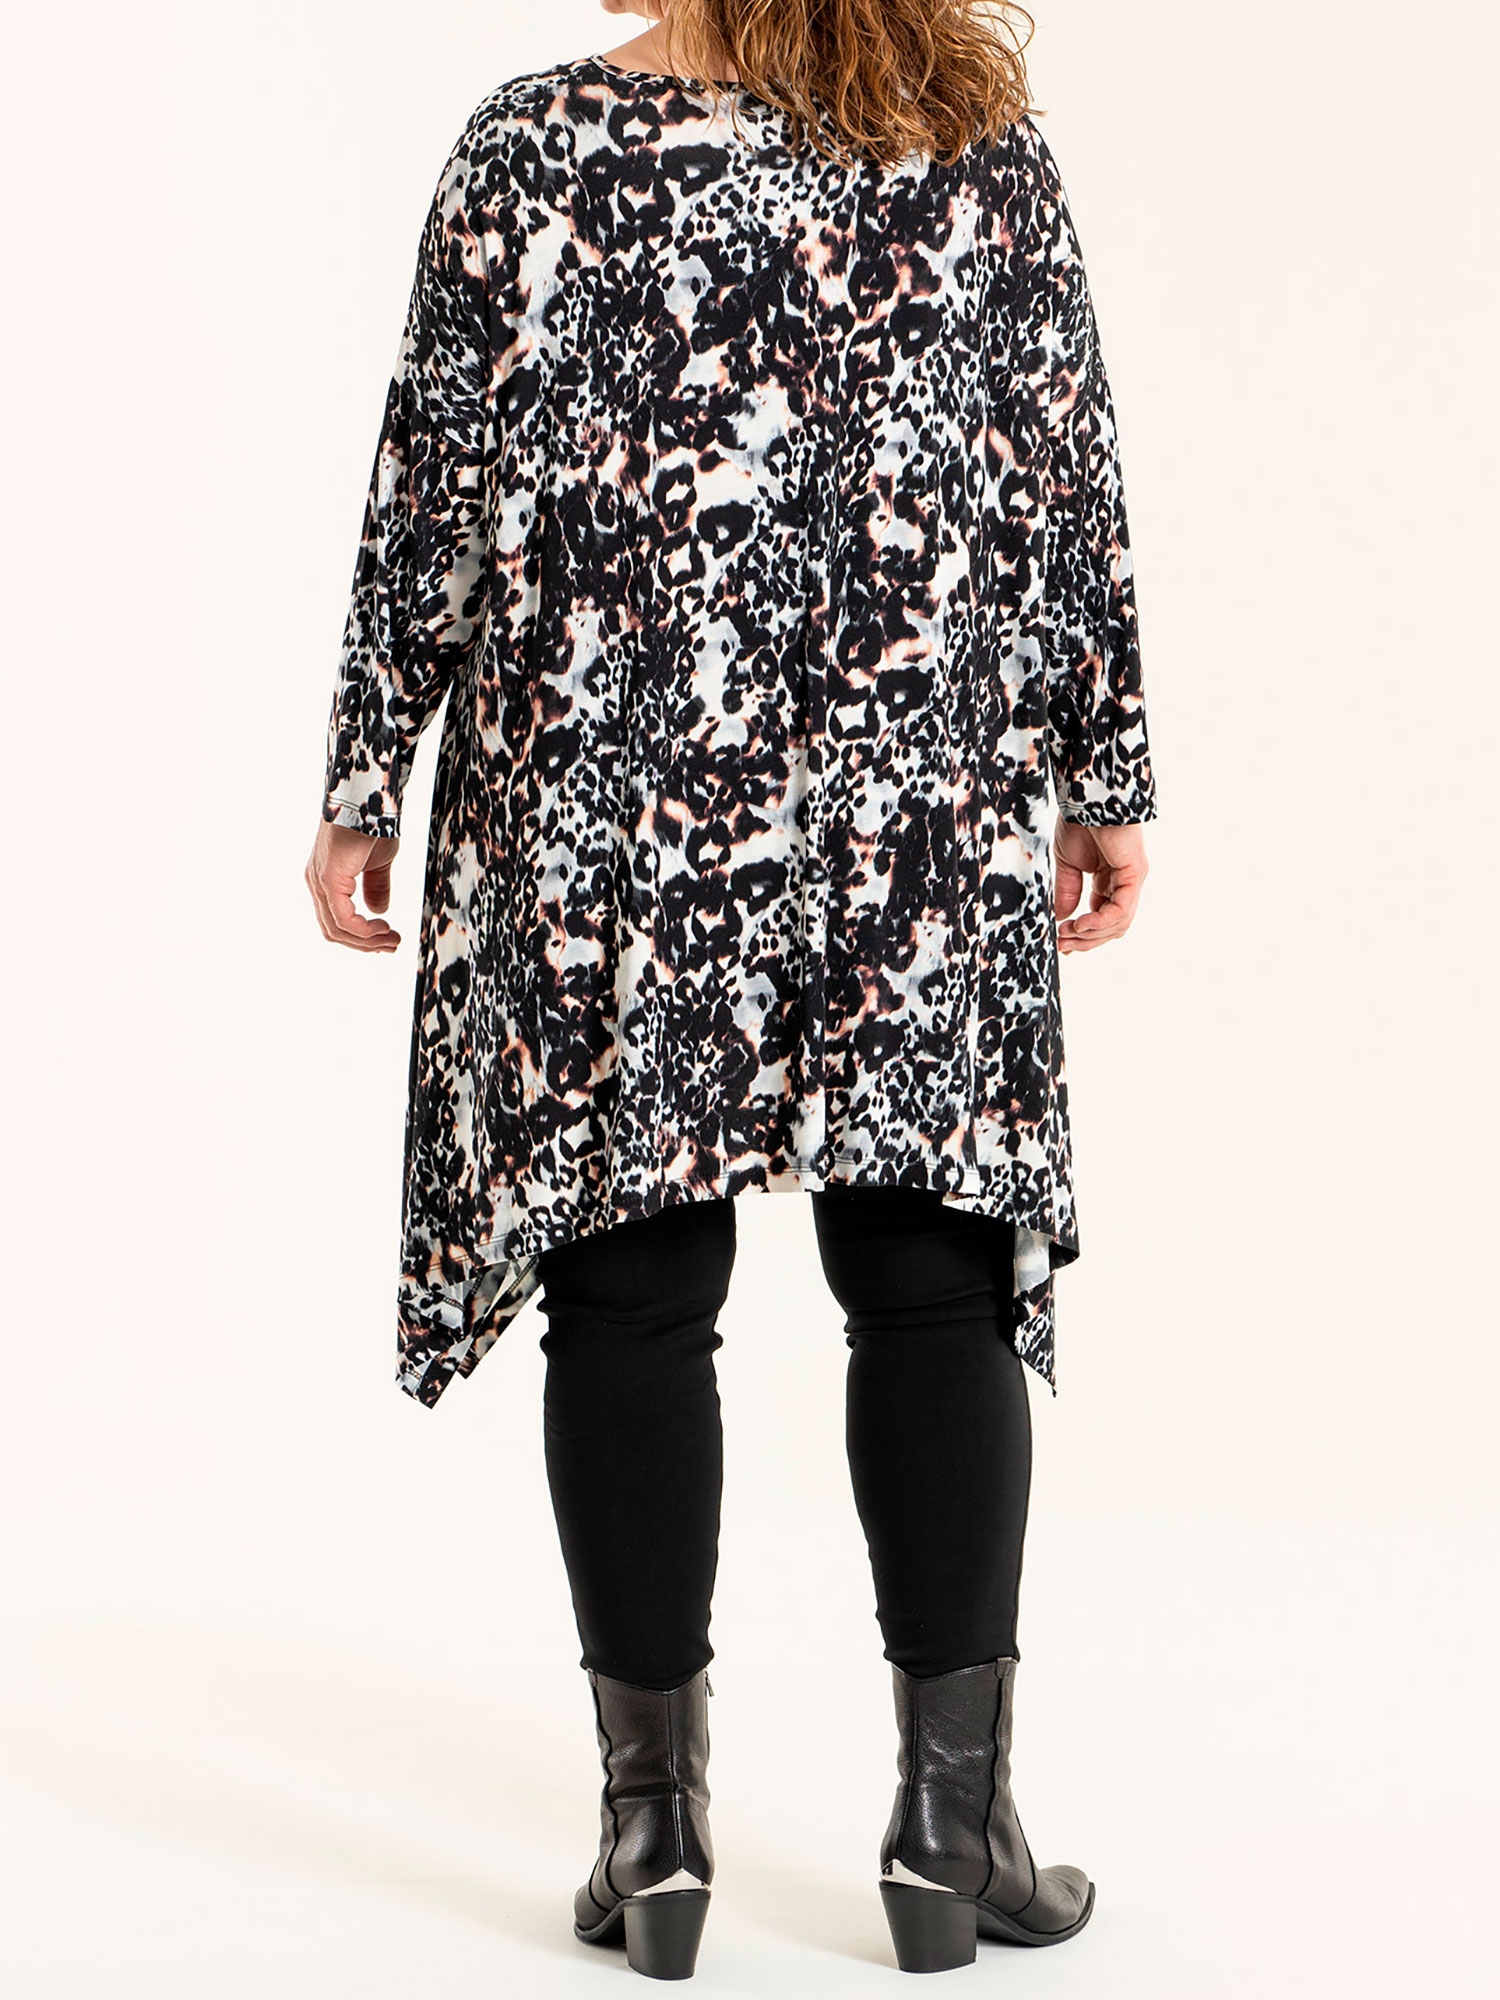 CATRINE - Viskose jersey tunika i smart print fra Gozzip